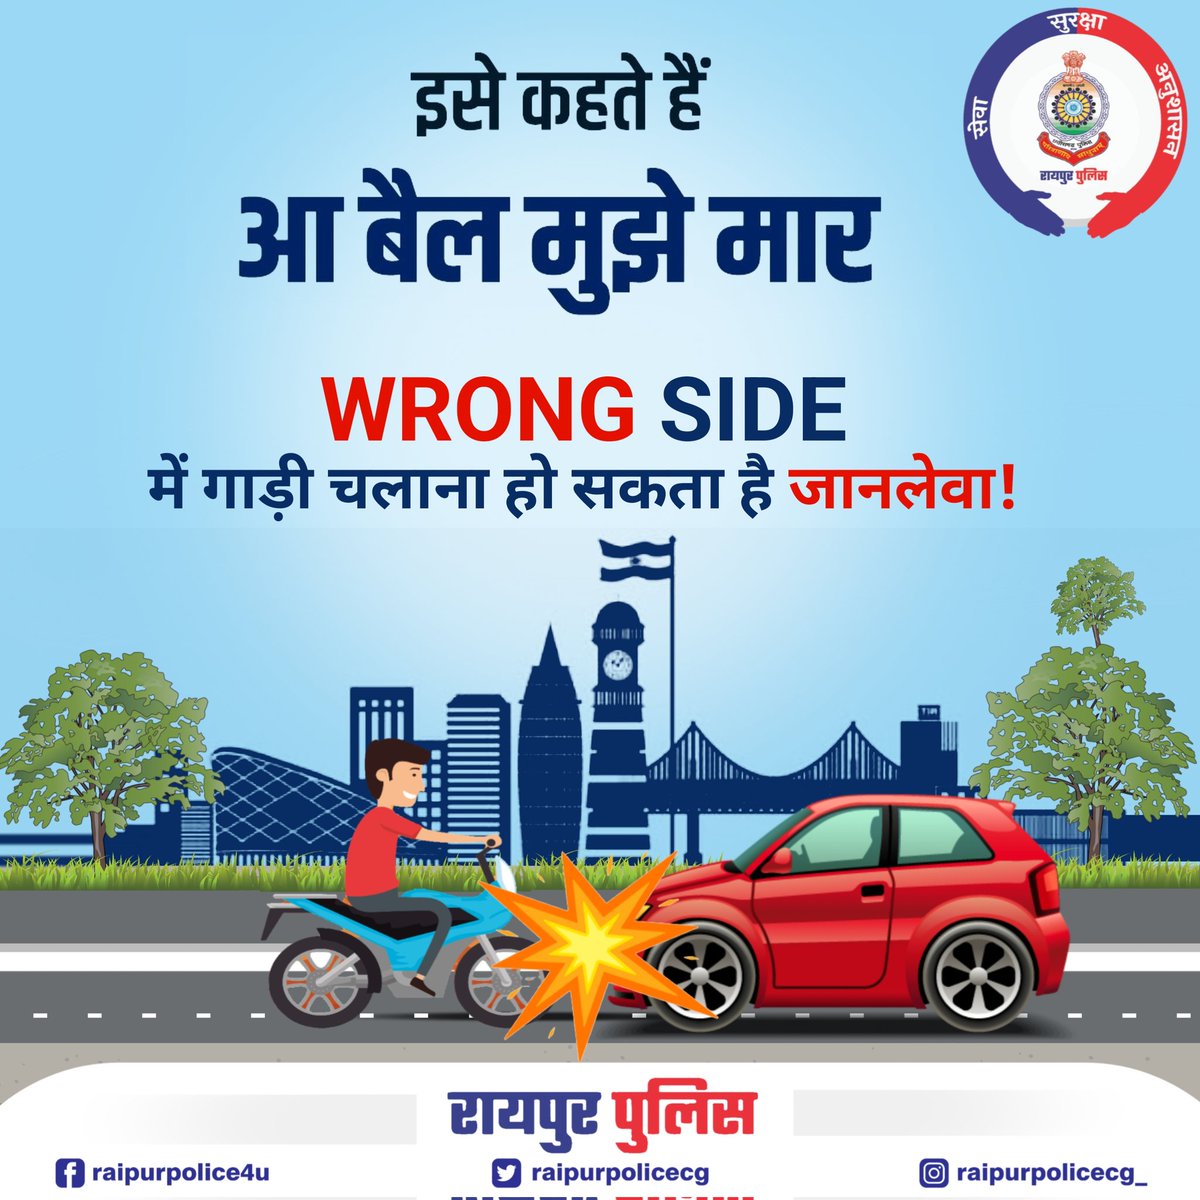 यातायात नियमों का पालन करे और दुर्घटना से बचे! . #raipurpolice #raipur #raipurtrafficpolice